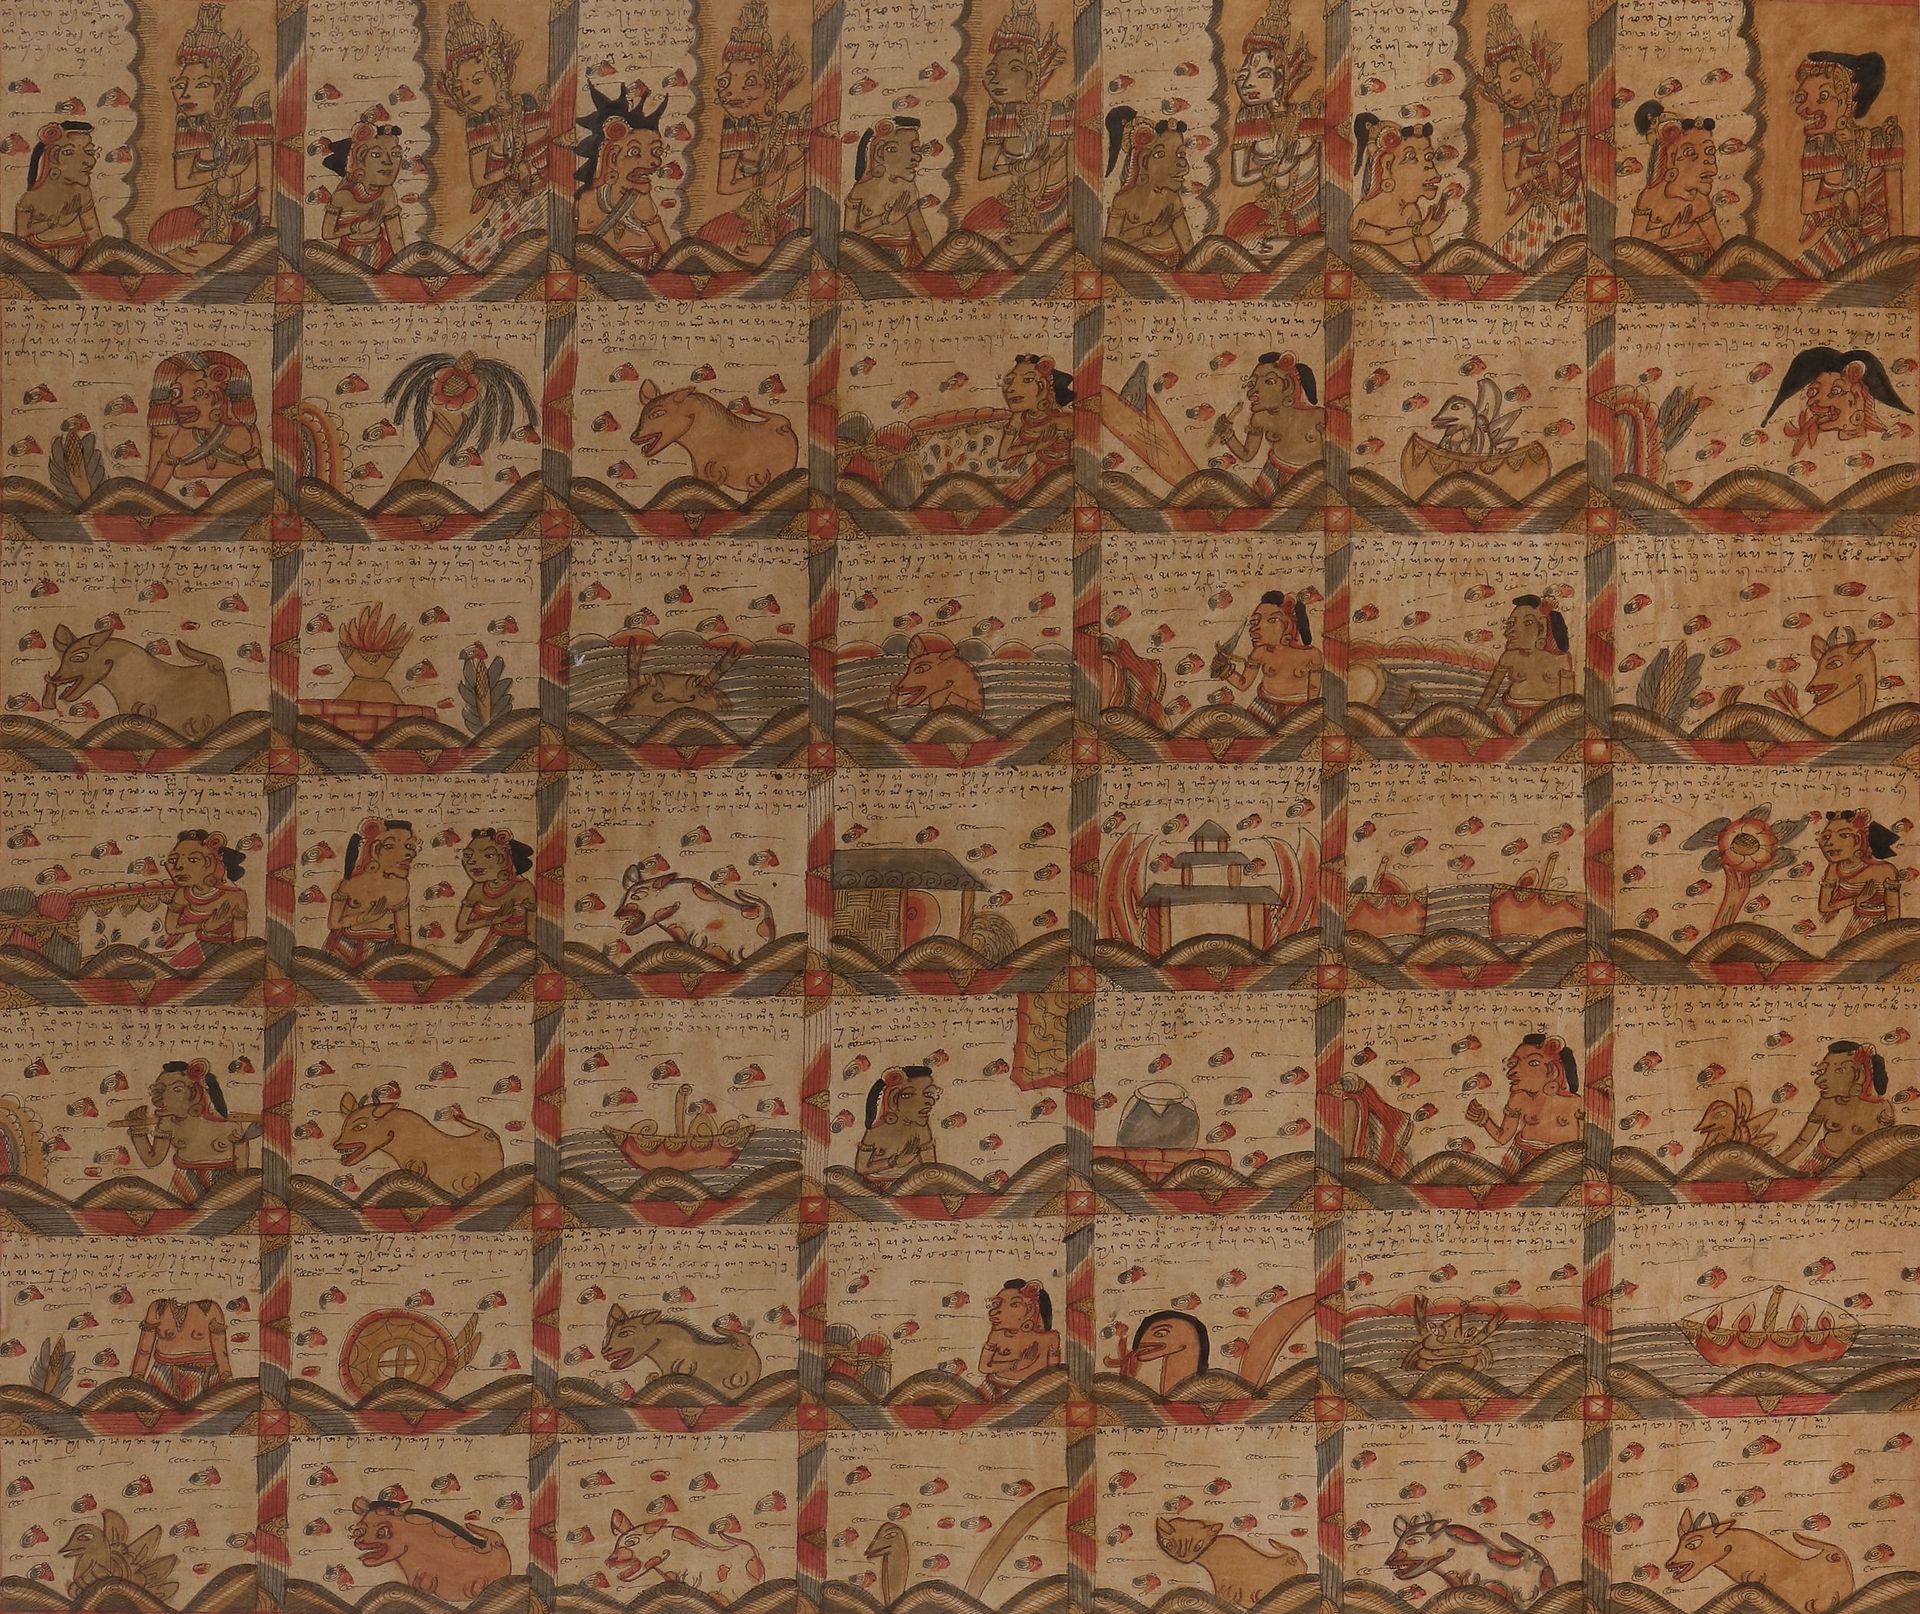 Null Palelintangan (calendario astrológico), Bali, siglo XXPintura
sobre tela di&hellip;